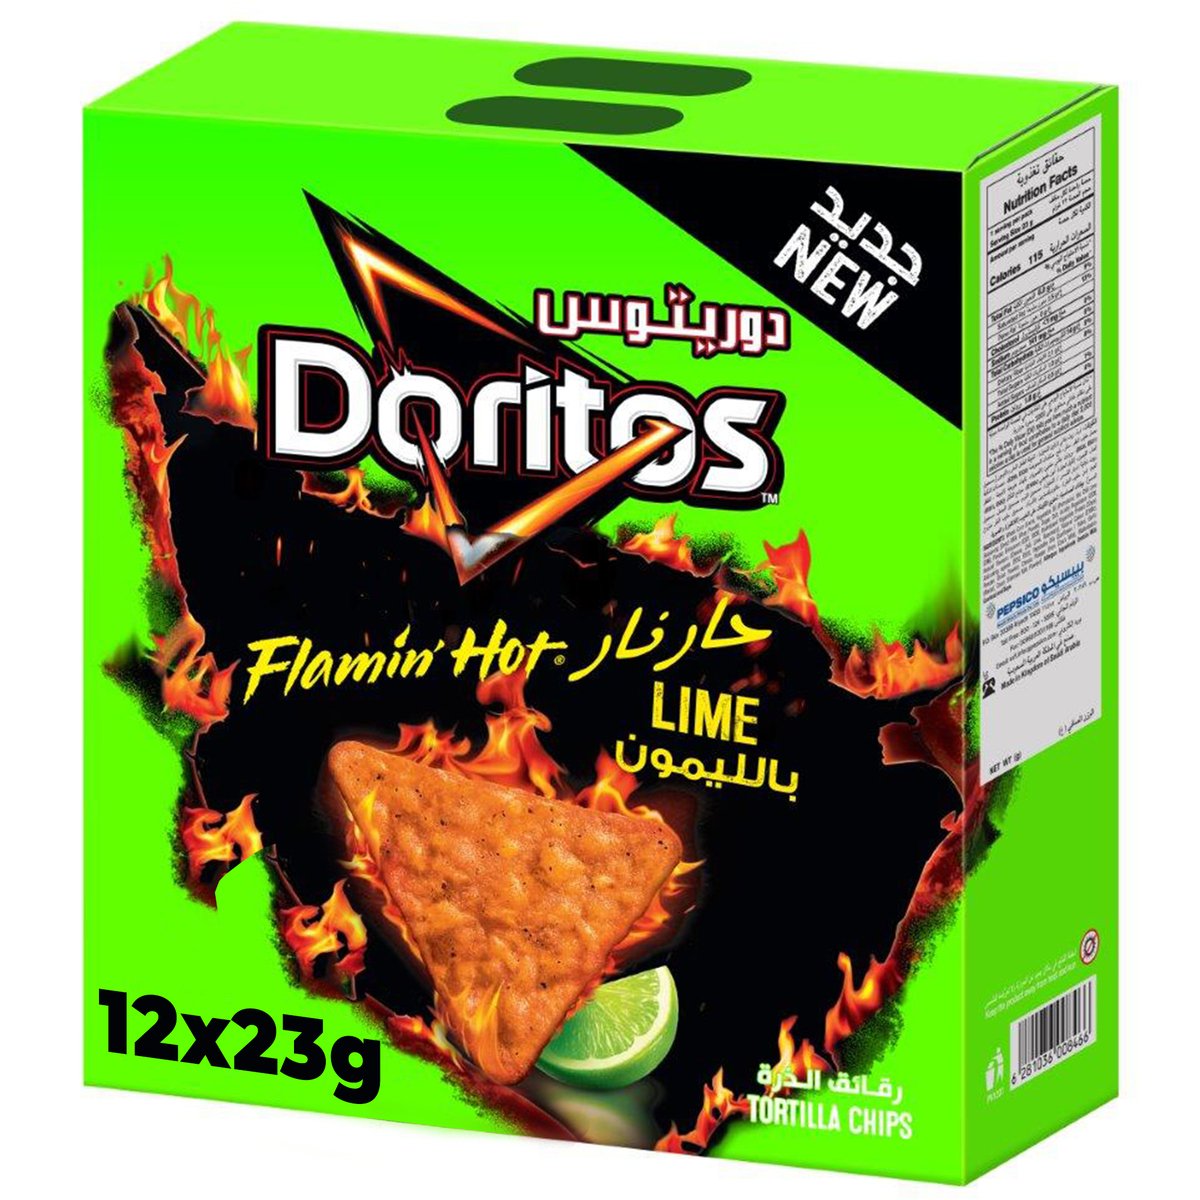 Doritos Flamin Hot Lime Tortilla Chips 16 x 23 g